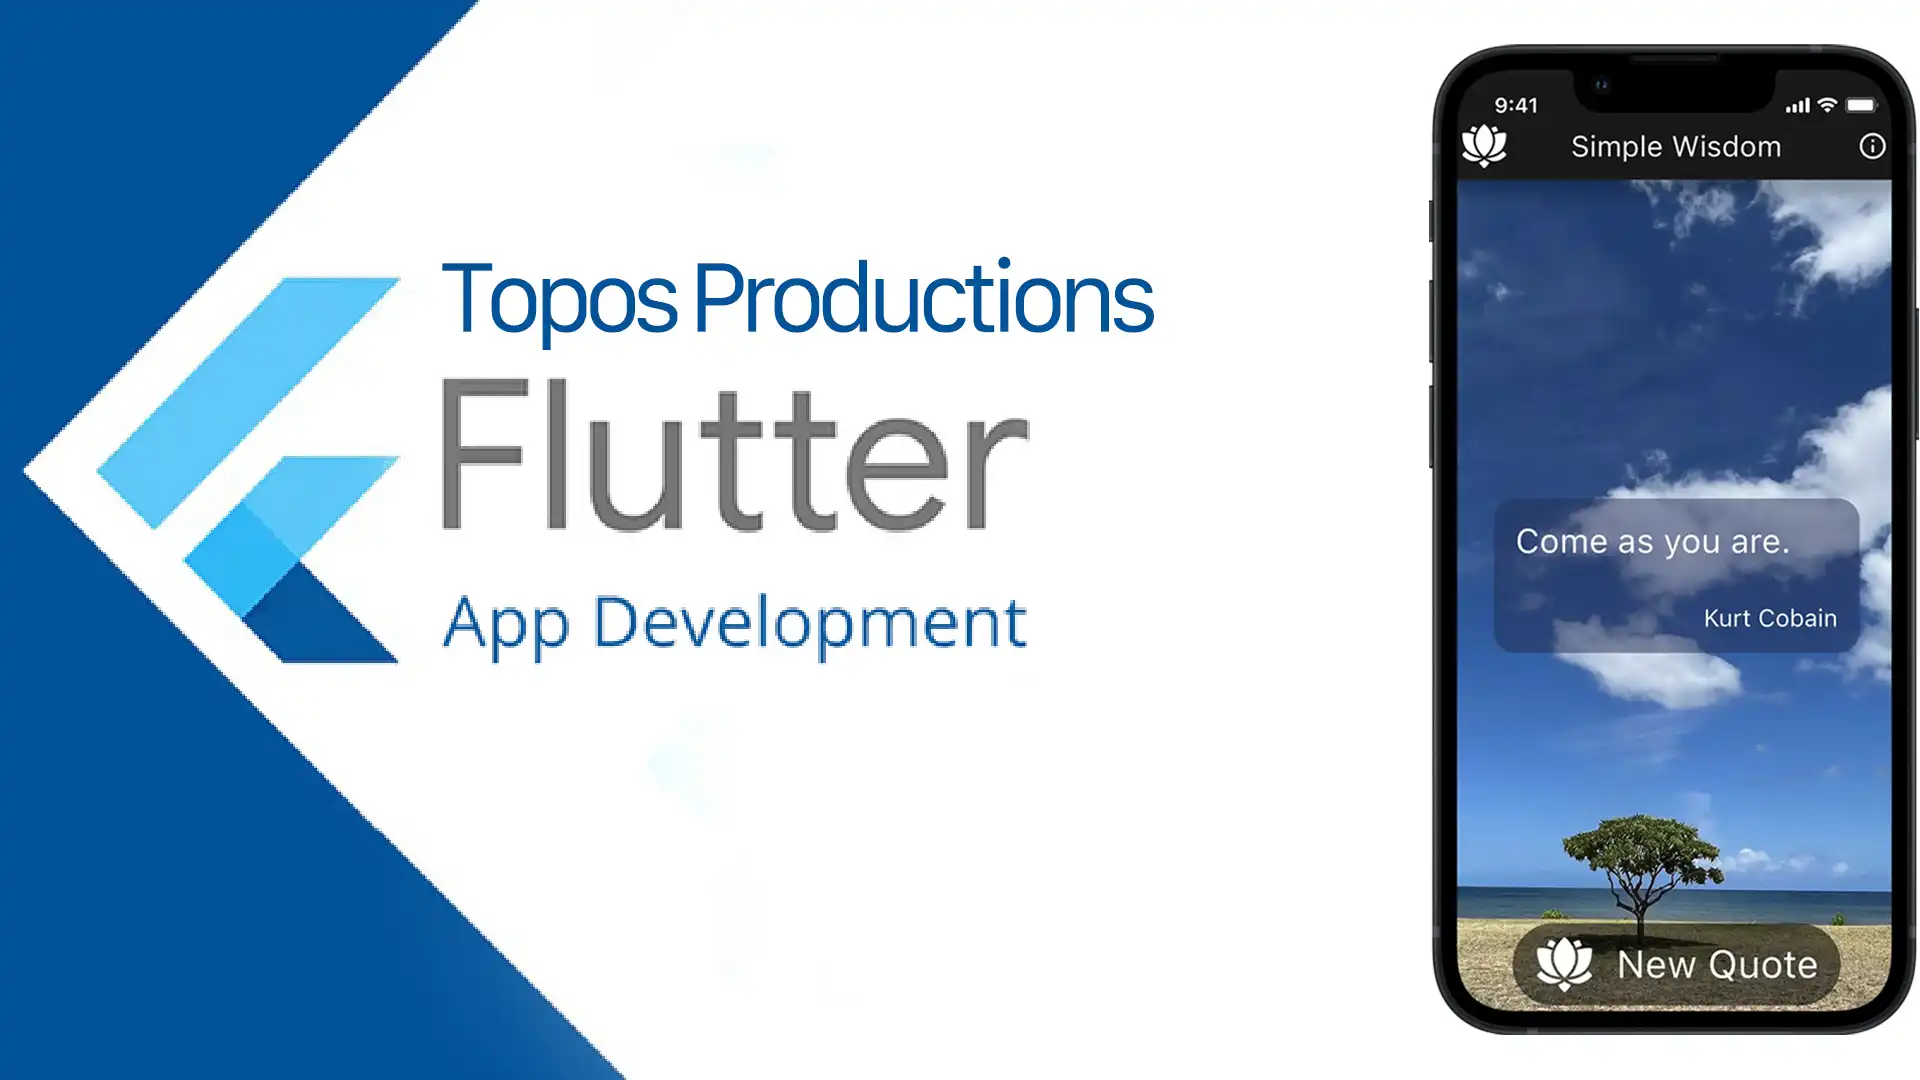 Flutter App Development by Topos Productions